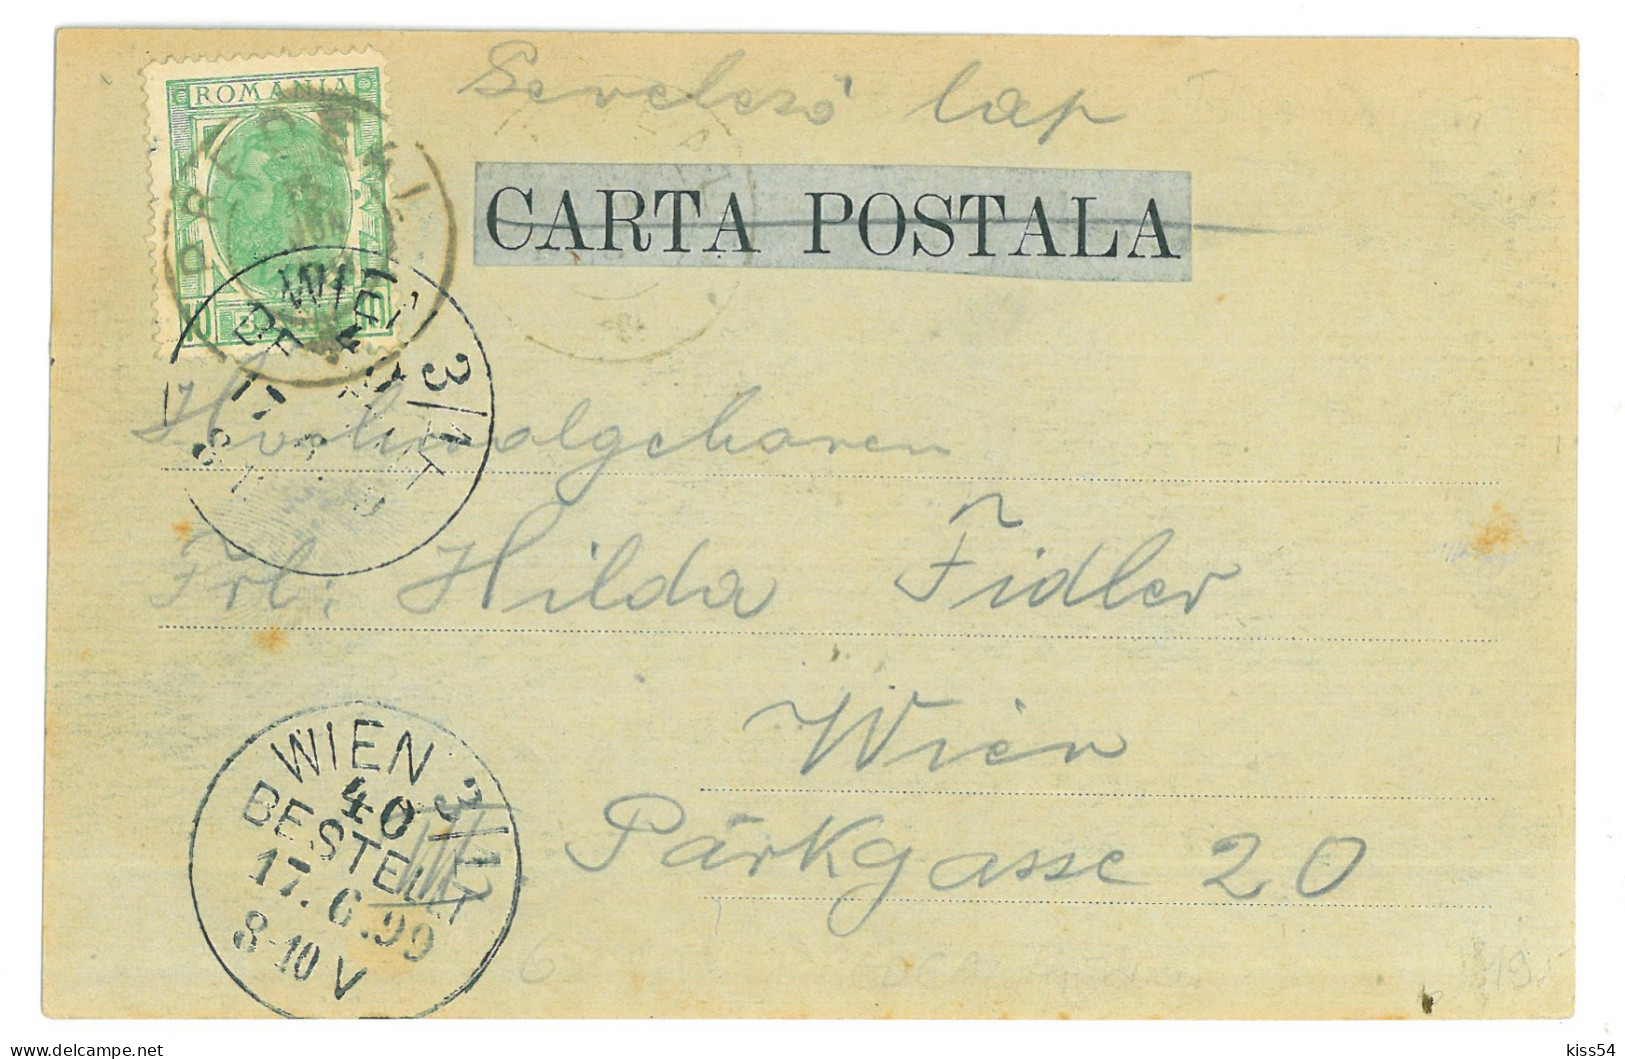 RO 77 - 23756 PREDEAL, Brasov, Railway Station, Litho, Romania - Old Postcard - Used - 1899 - Rumania